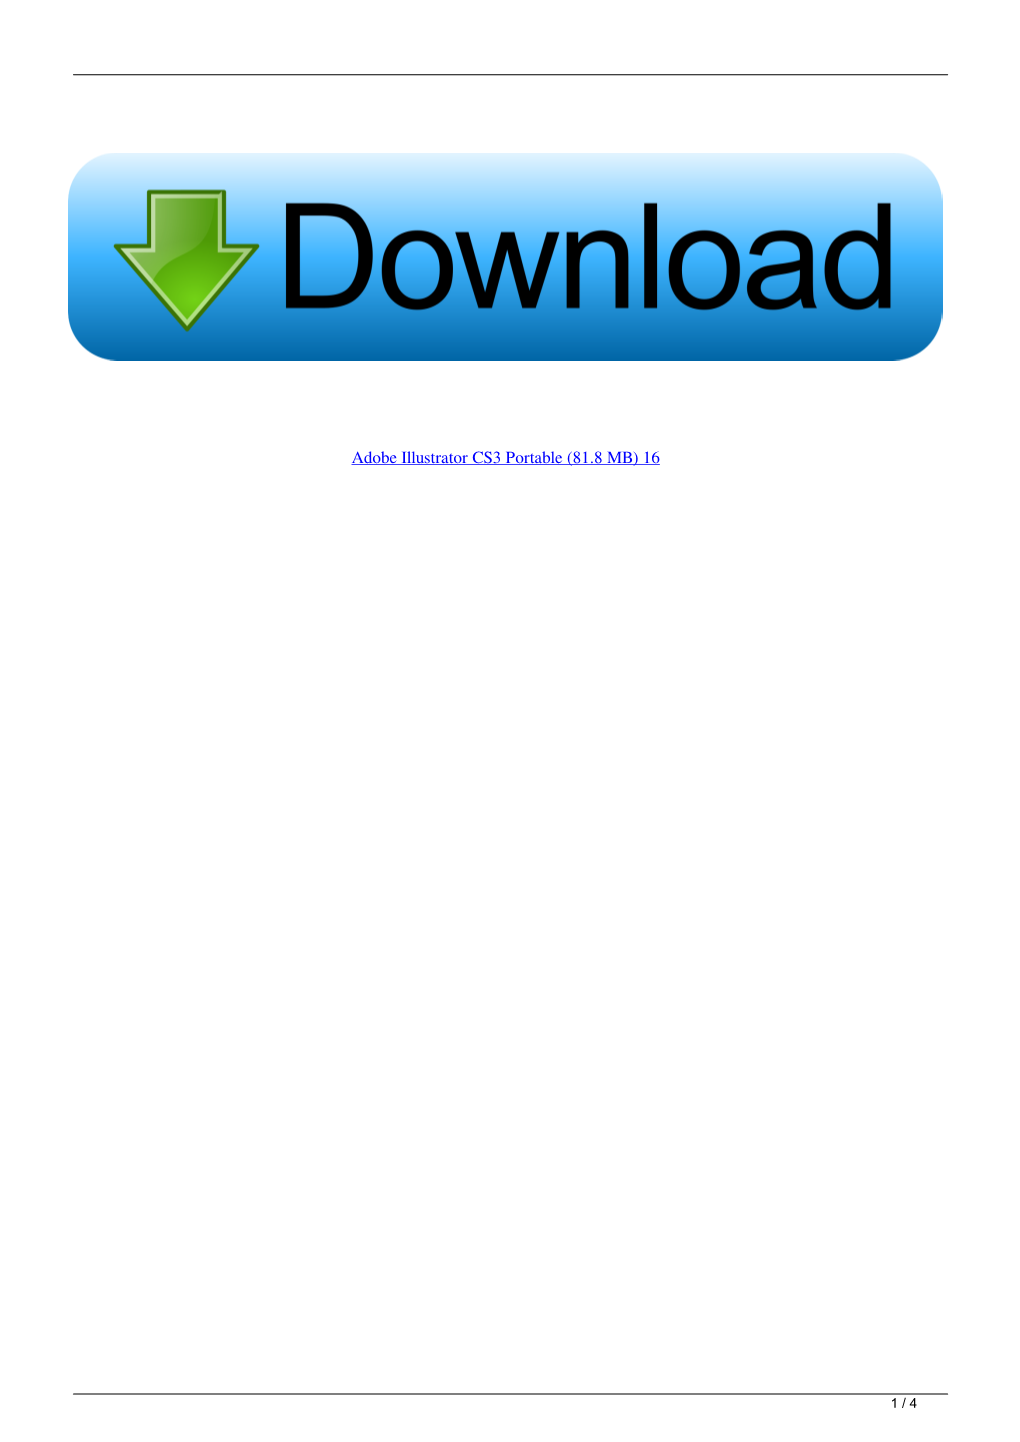 Adobe Illustrator CS3 Portable 818 MB 16